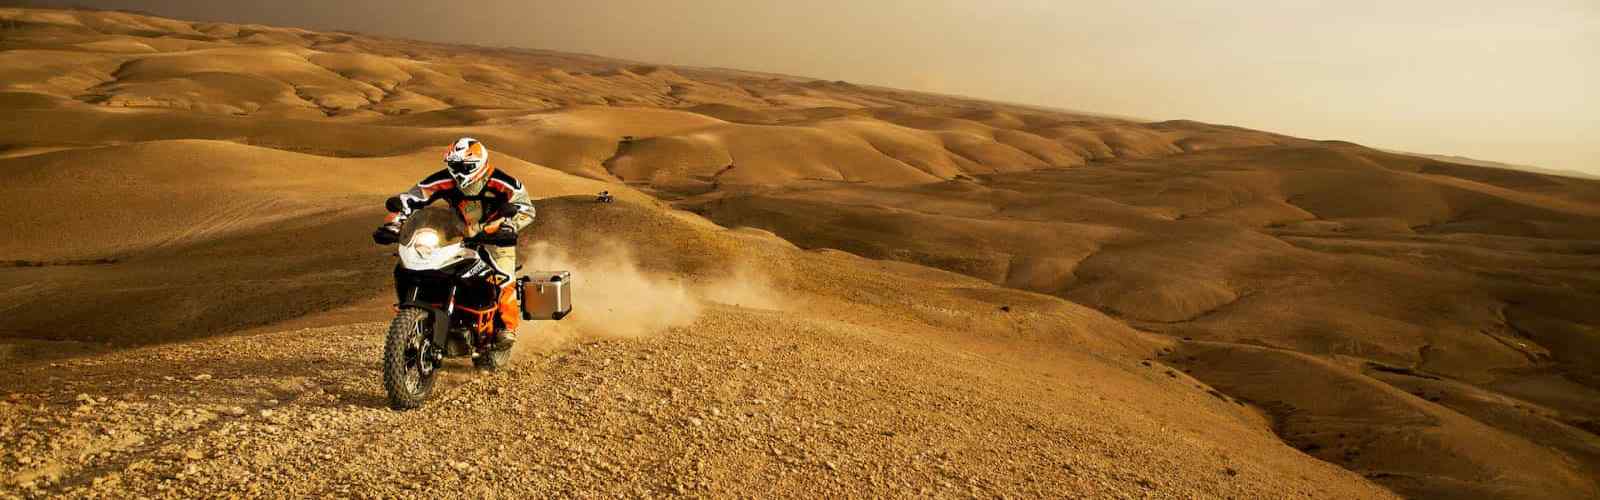 Amazing motorcycle ride through the Tunisian Sahara desert